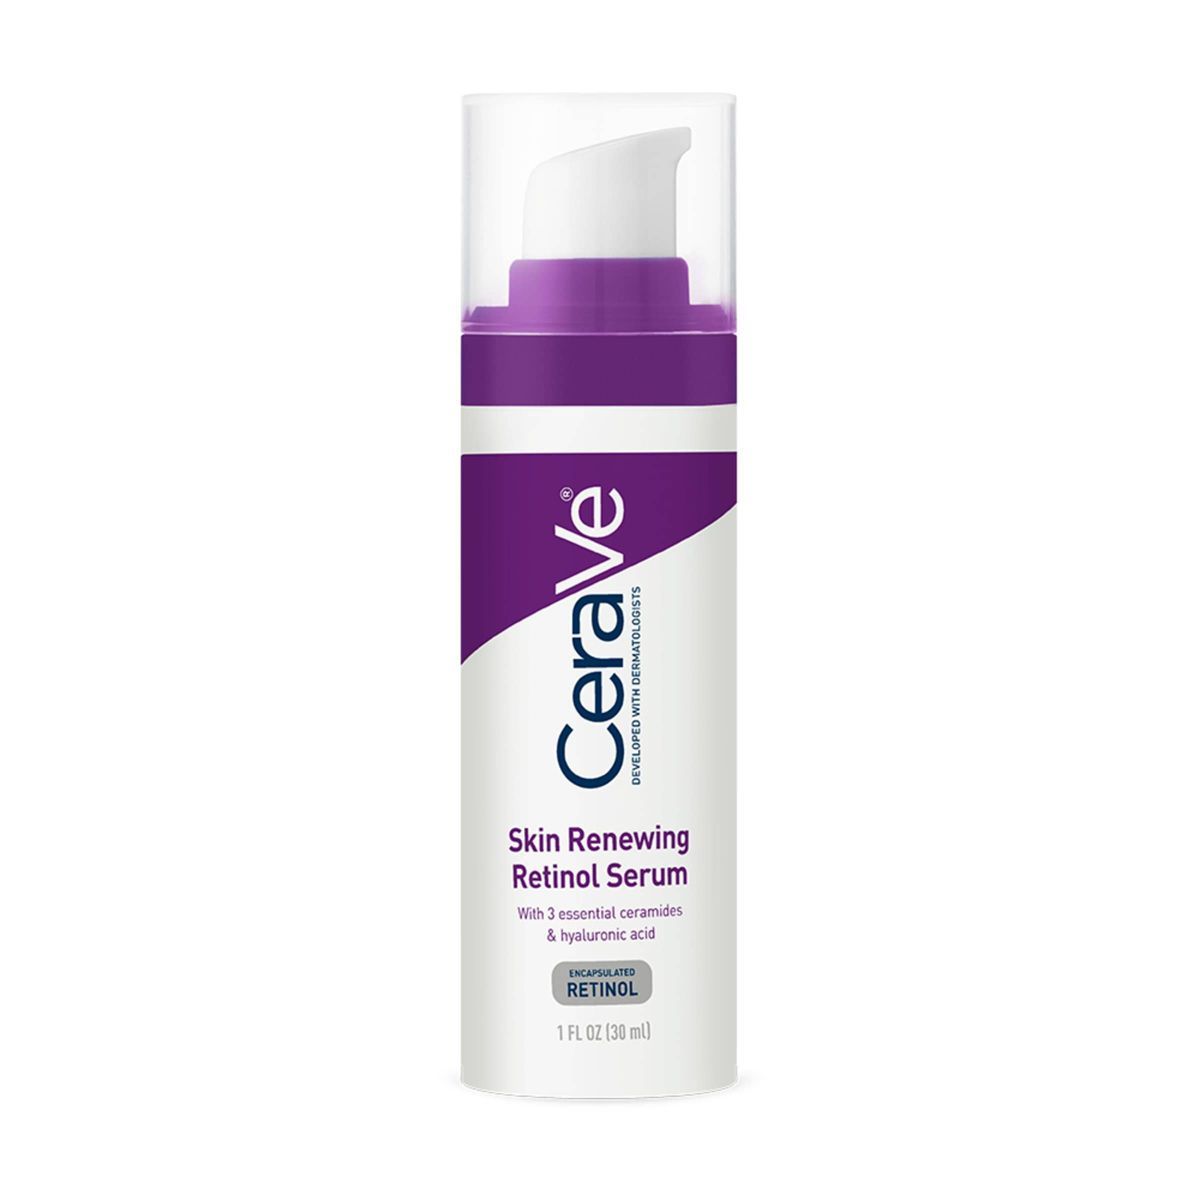 CeraVe Skin Renewing Retinol Face Serum for Fine Lines and Wrinkles - 1oz | Target